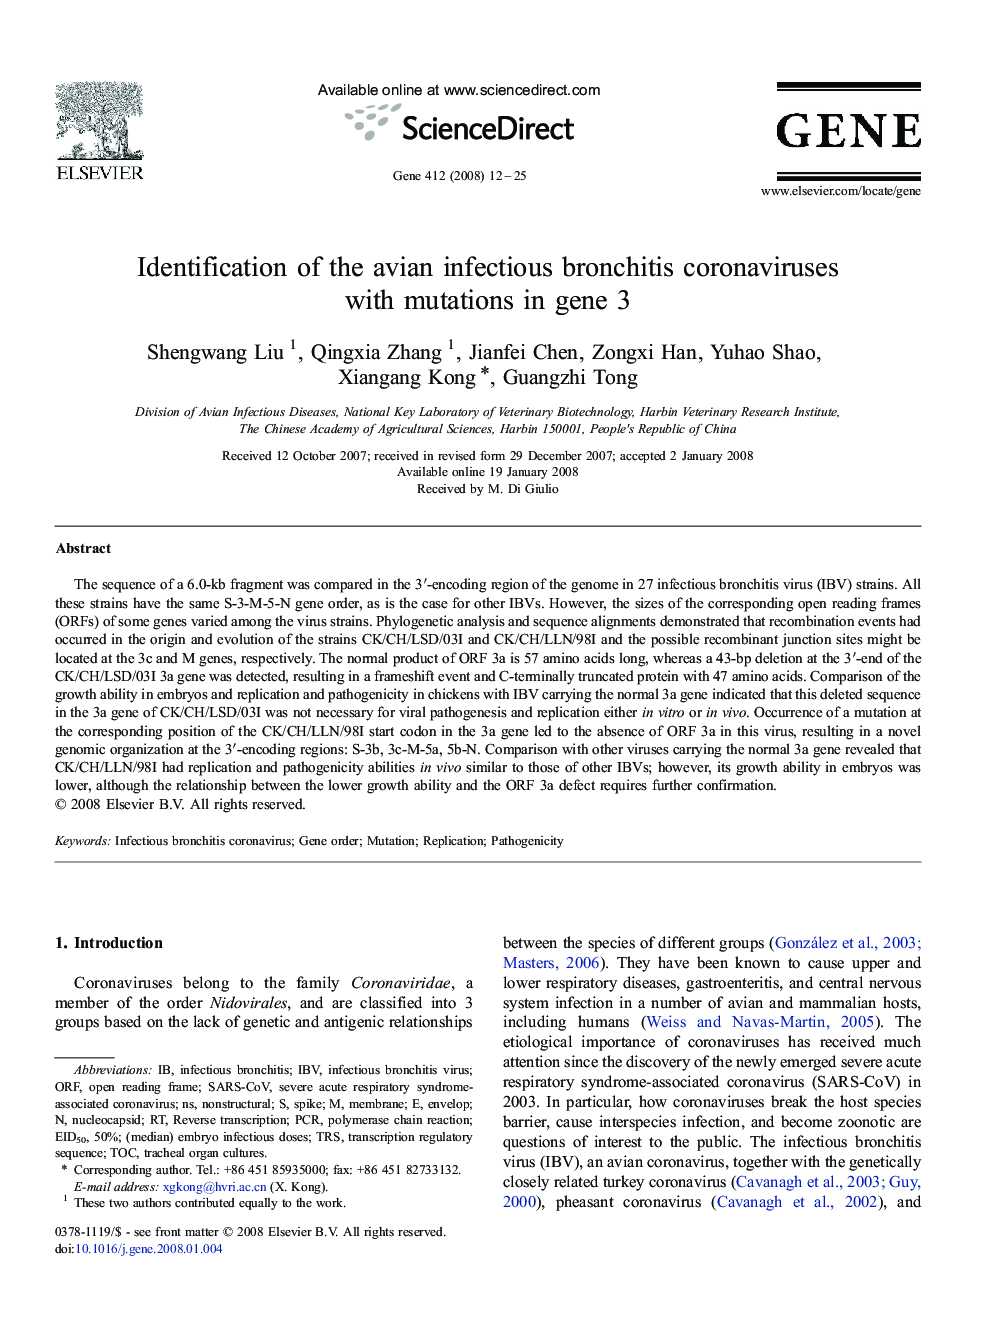 Identification of the avian infectious bronchitis coronaviruses with mutations in gene 3